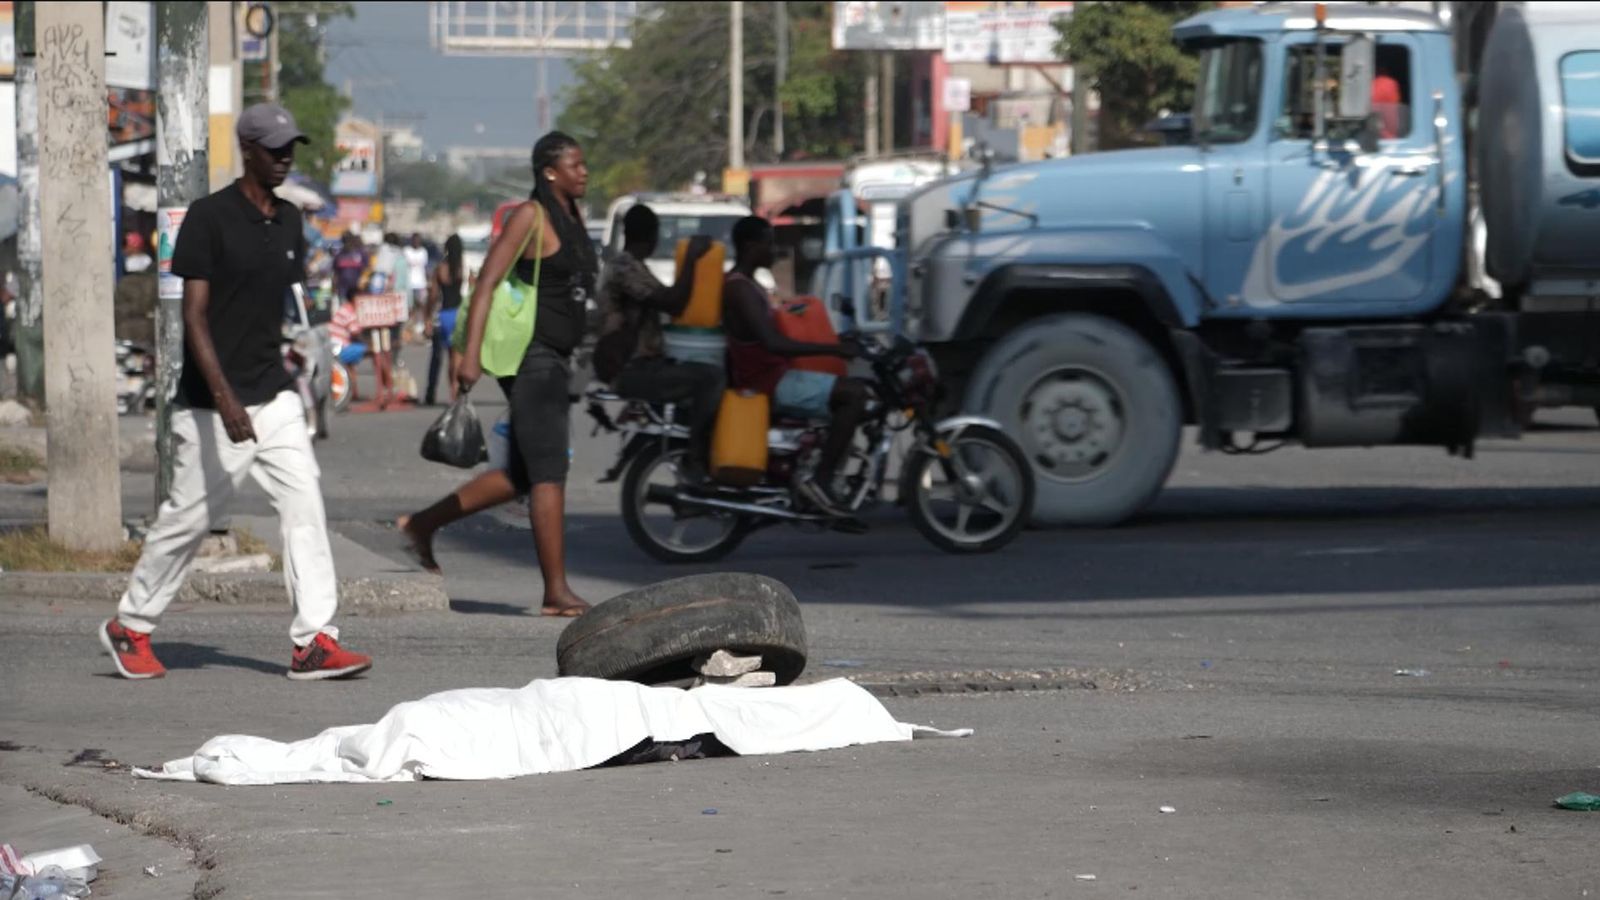 Vigilantes defending Haiti neighbourhood 'tooth and nail' against gang attacks